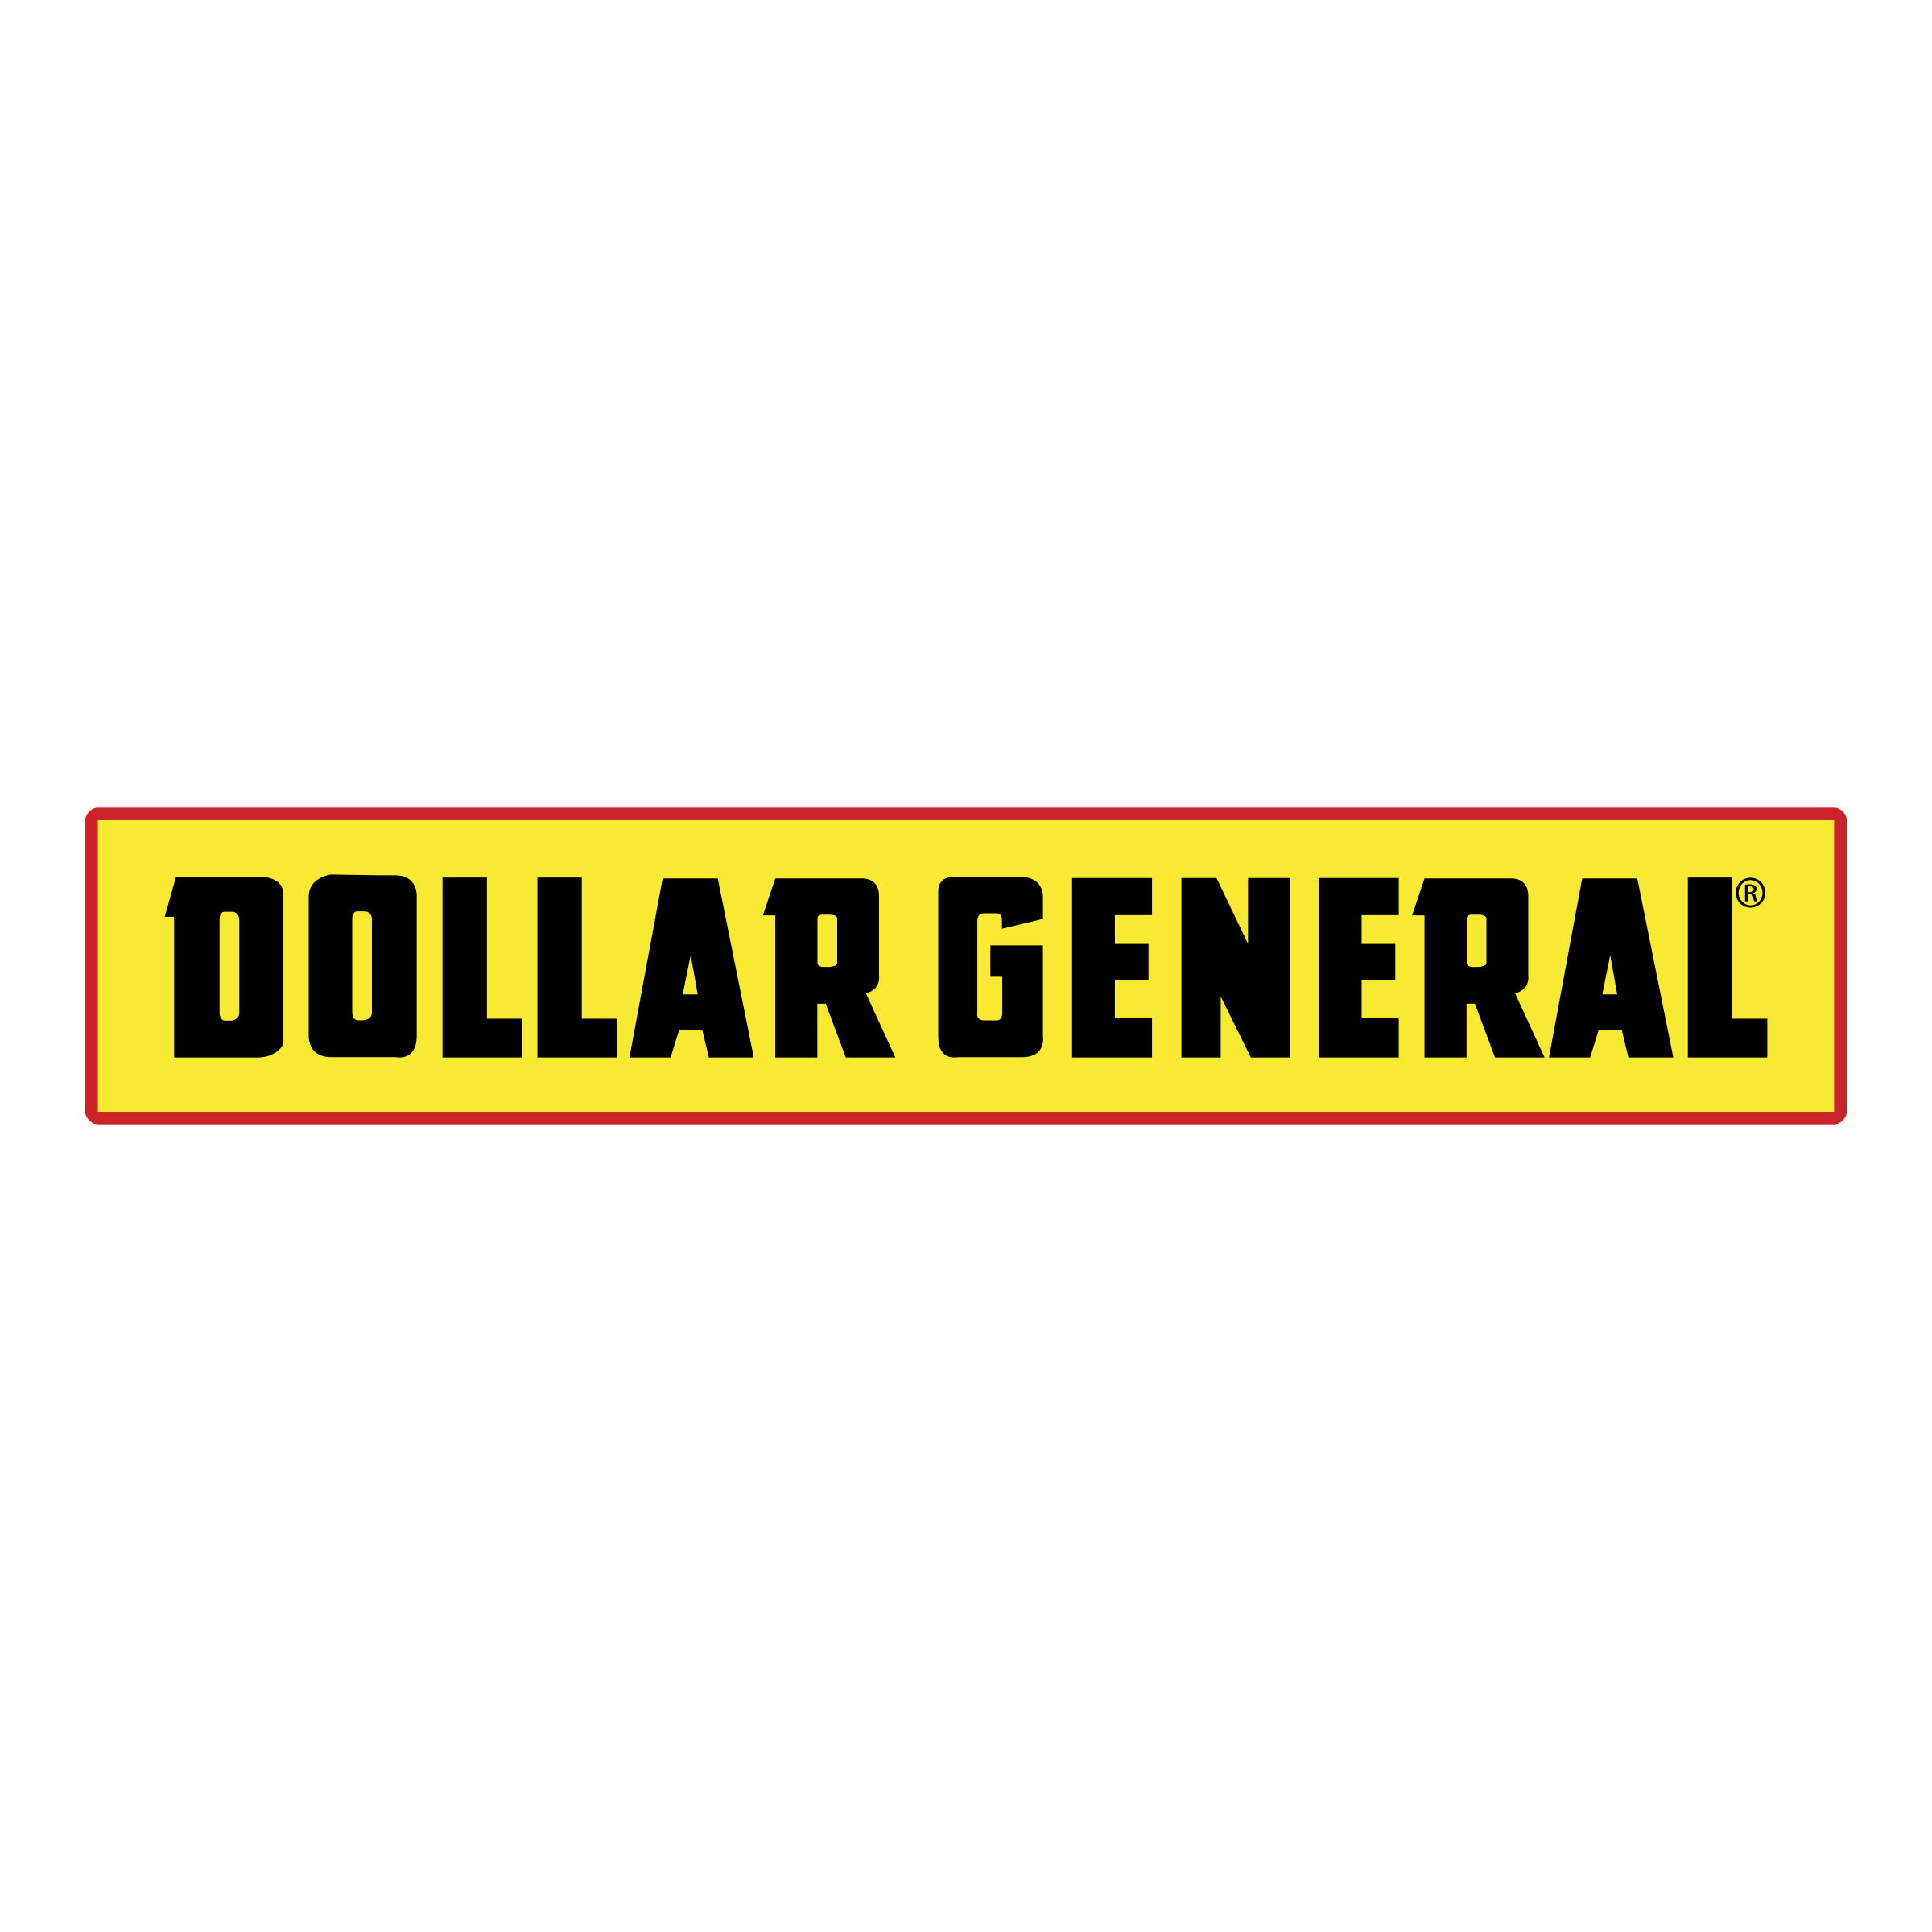 Dollar Genral Logo - Dollar General Logo PNG Transparent & SVG Vector - Freebie Supply